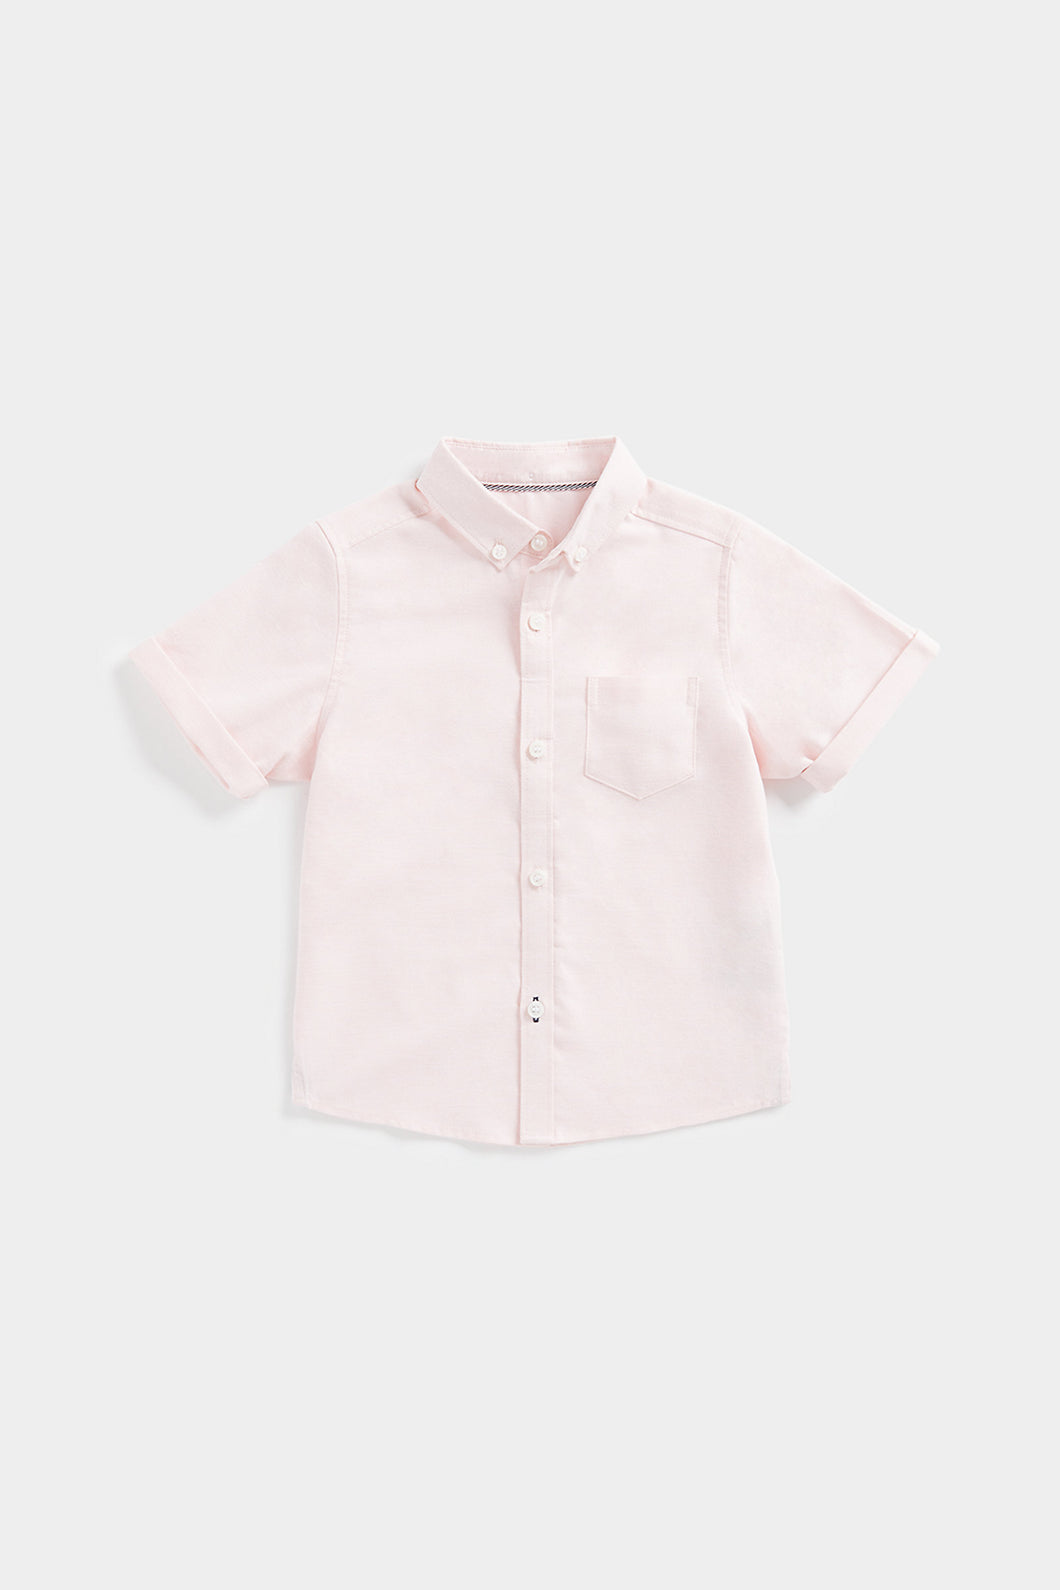 Mothercare Pink Short-Sleeved Shirt